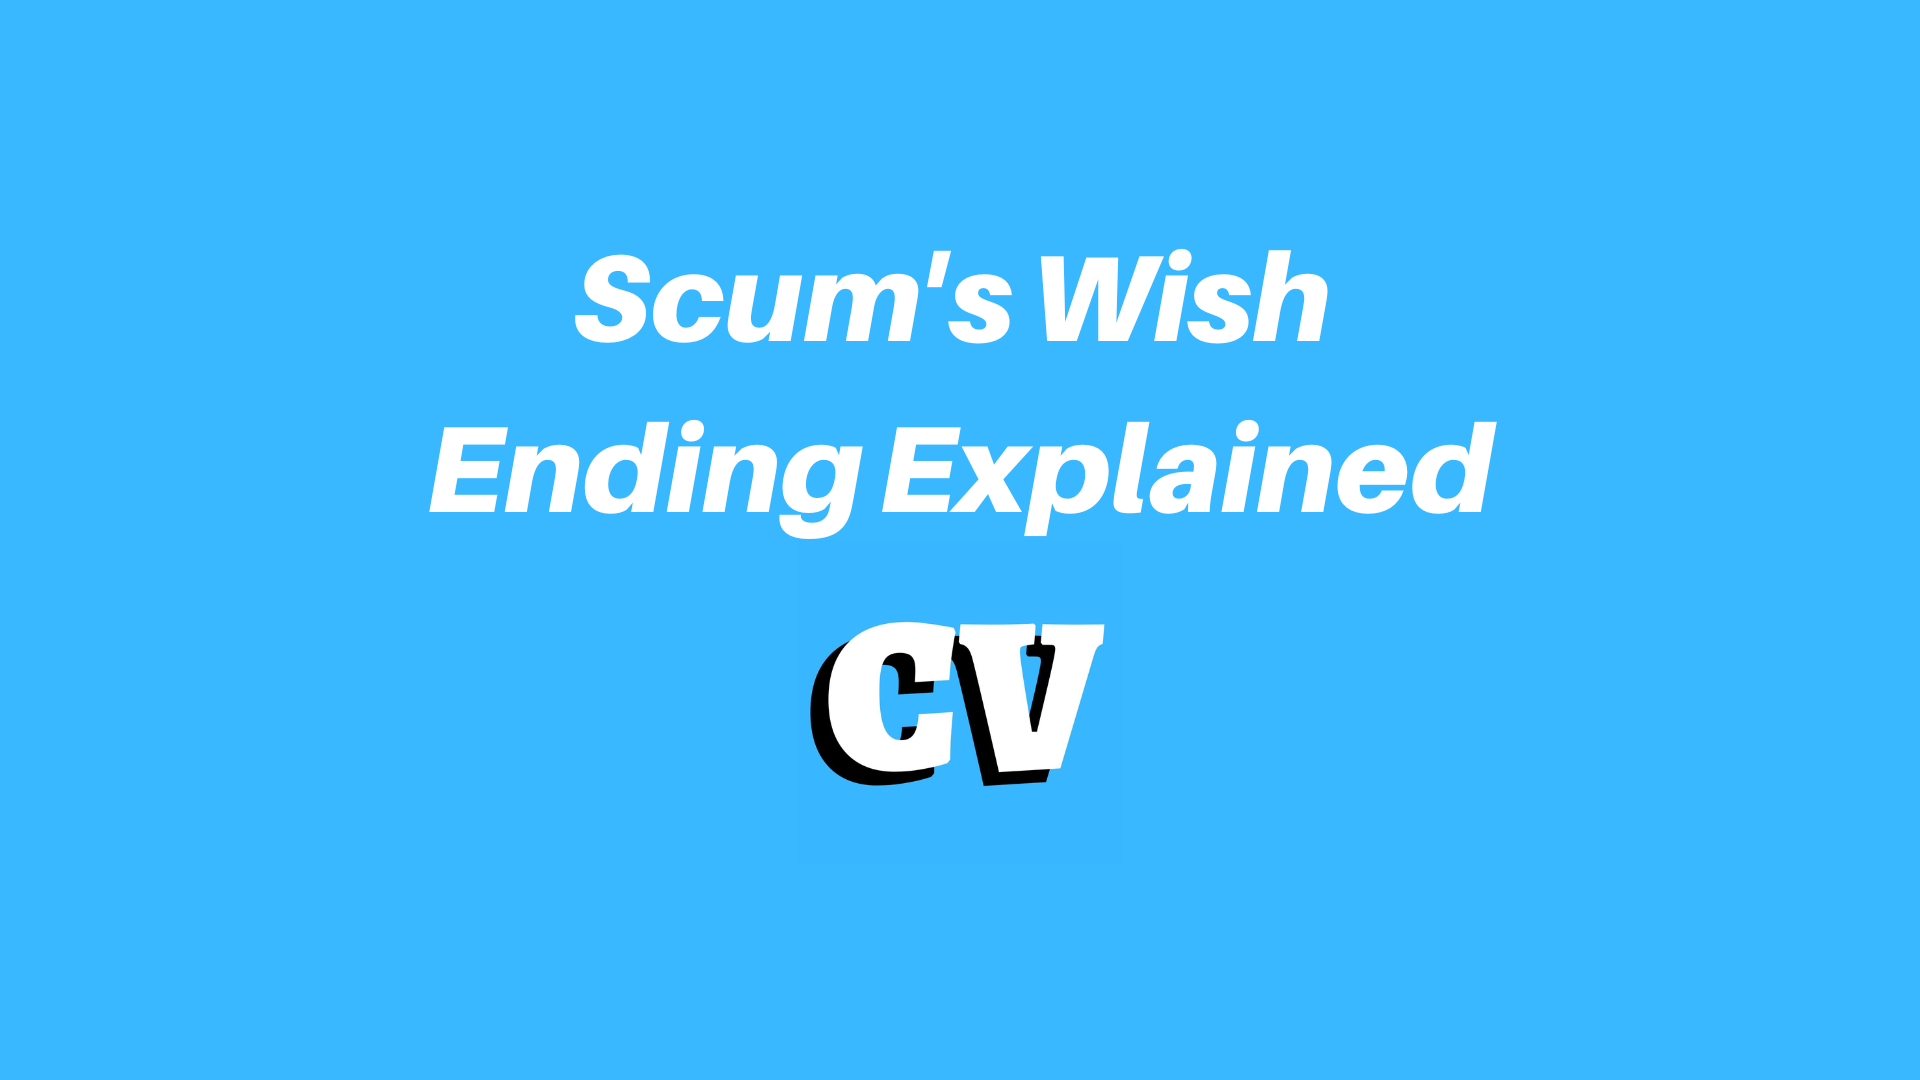 Scum's Wish Ending Explained